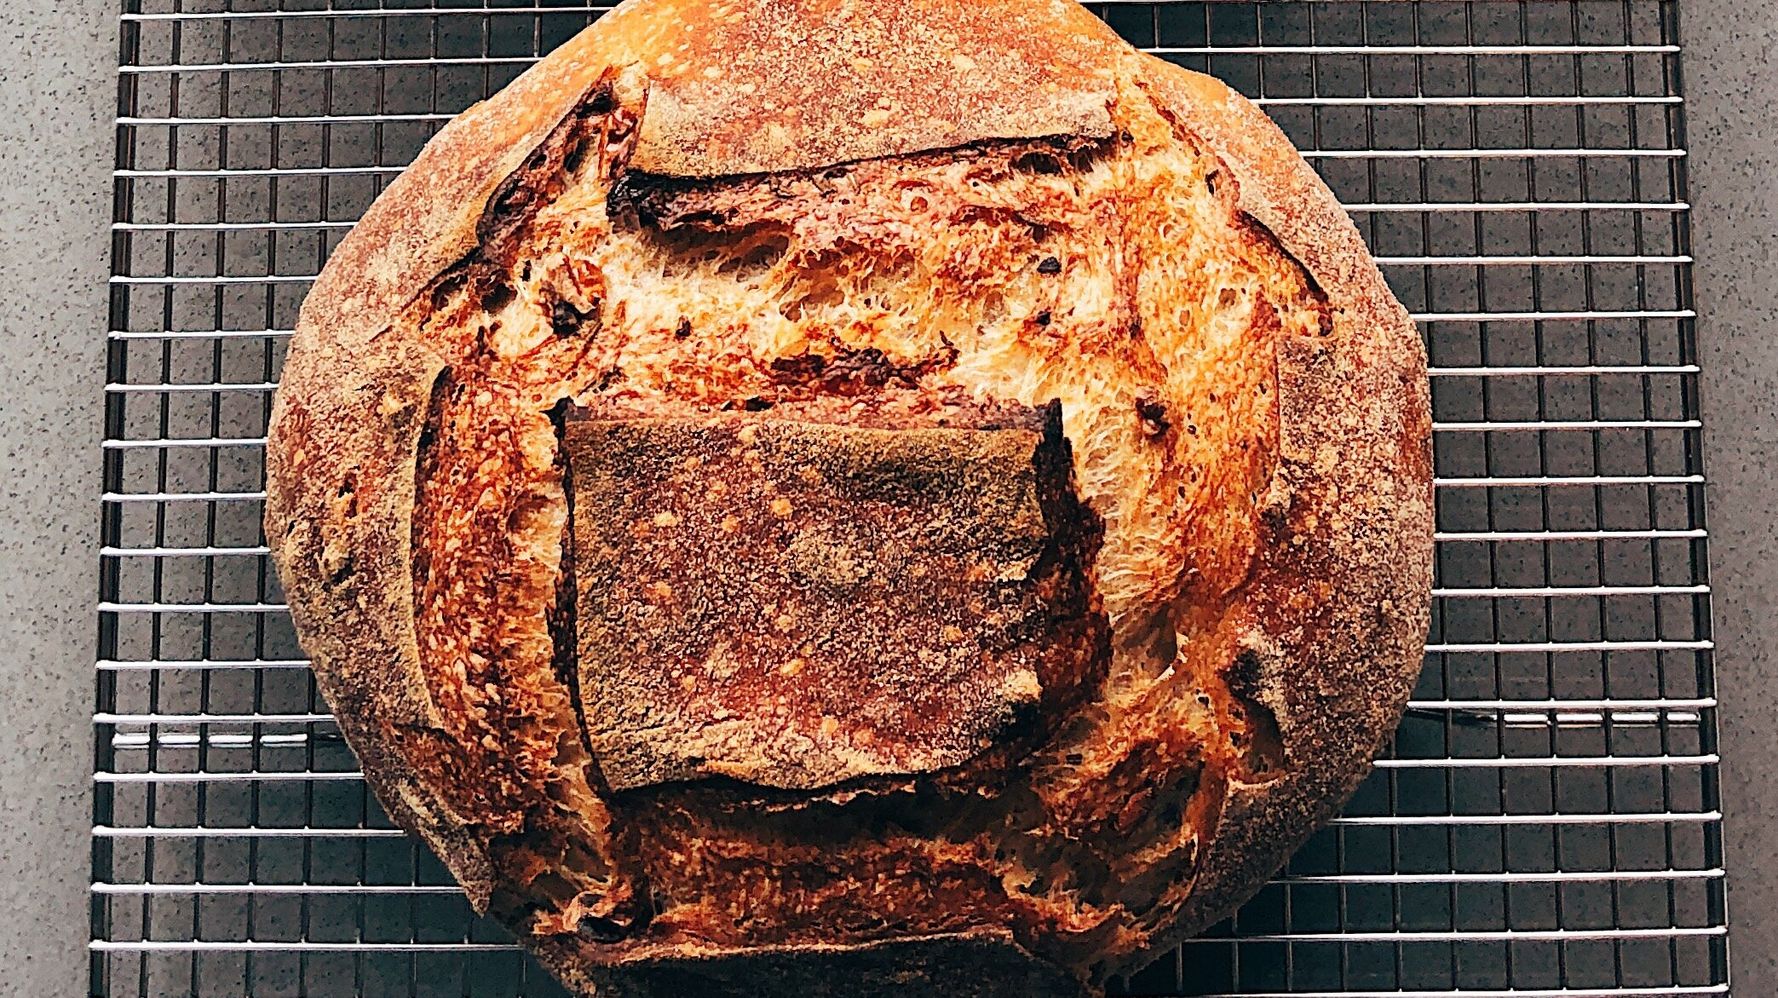 The Bread Bandwagon (How To Make Sourdough Bread) - Ruhlman